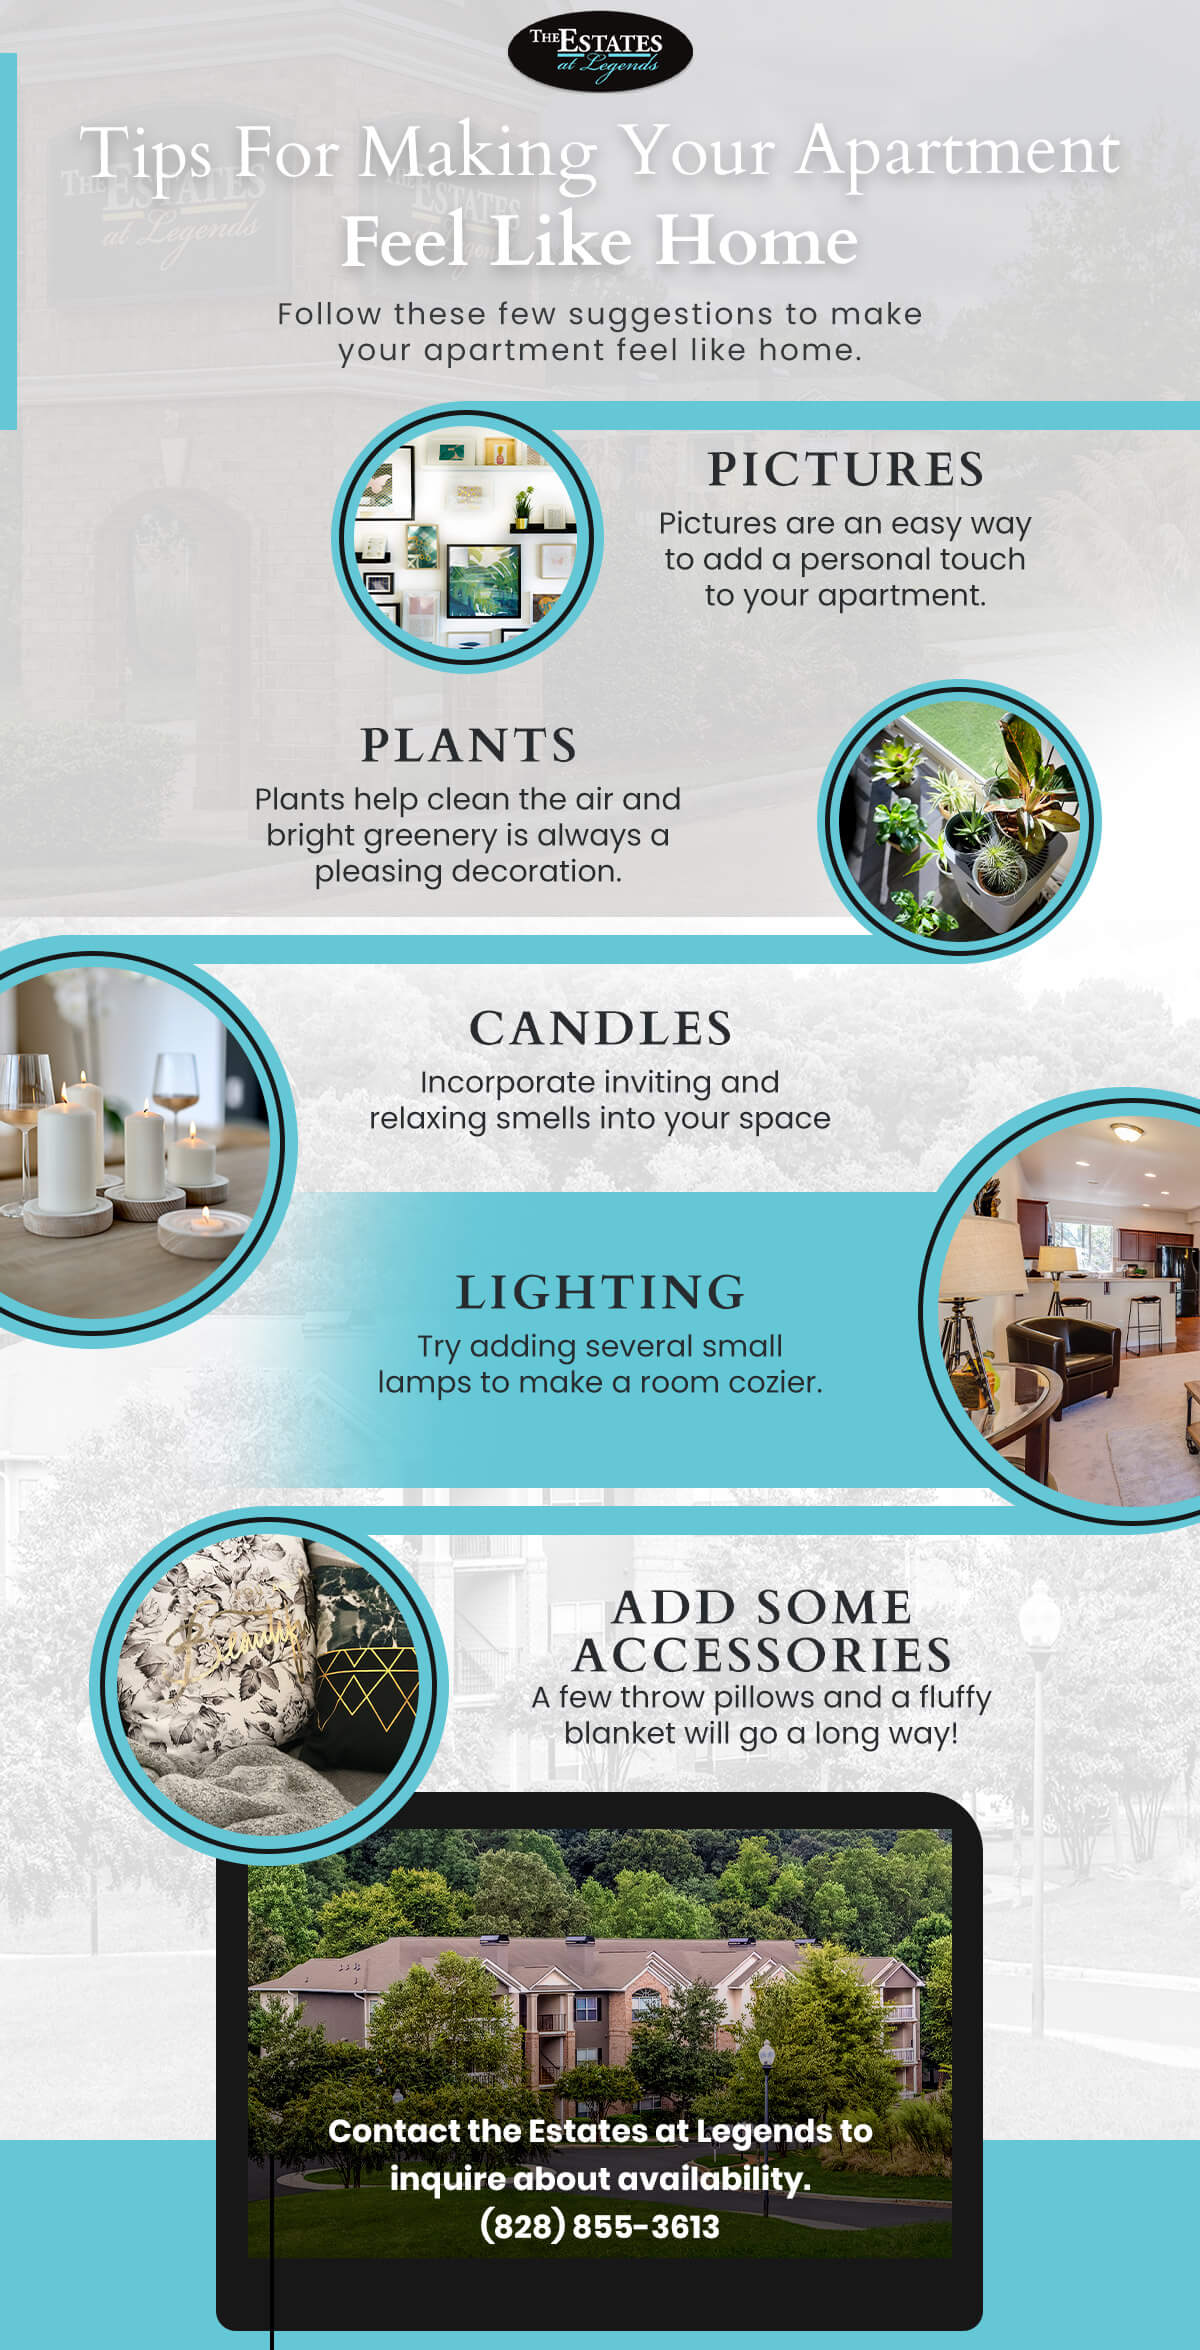 Tips-For-Making-Your-Apartment-Feel-Like-Home-SM-60749e94baa7e